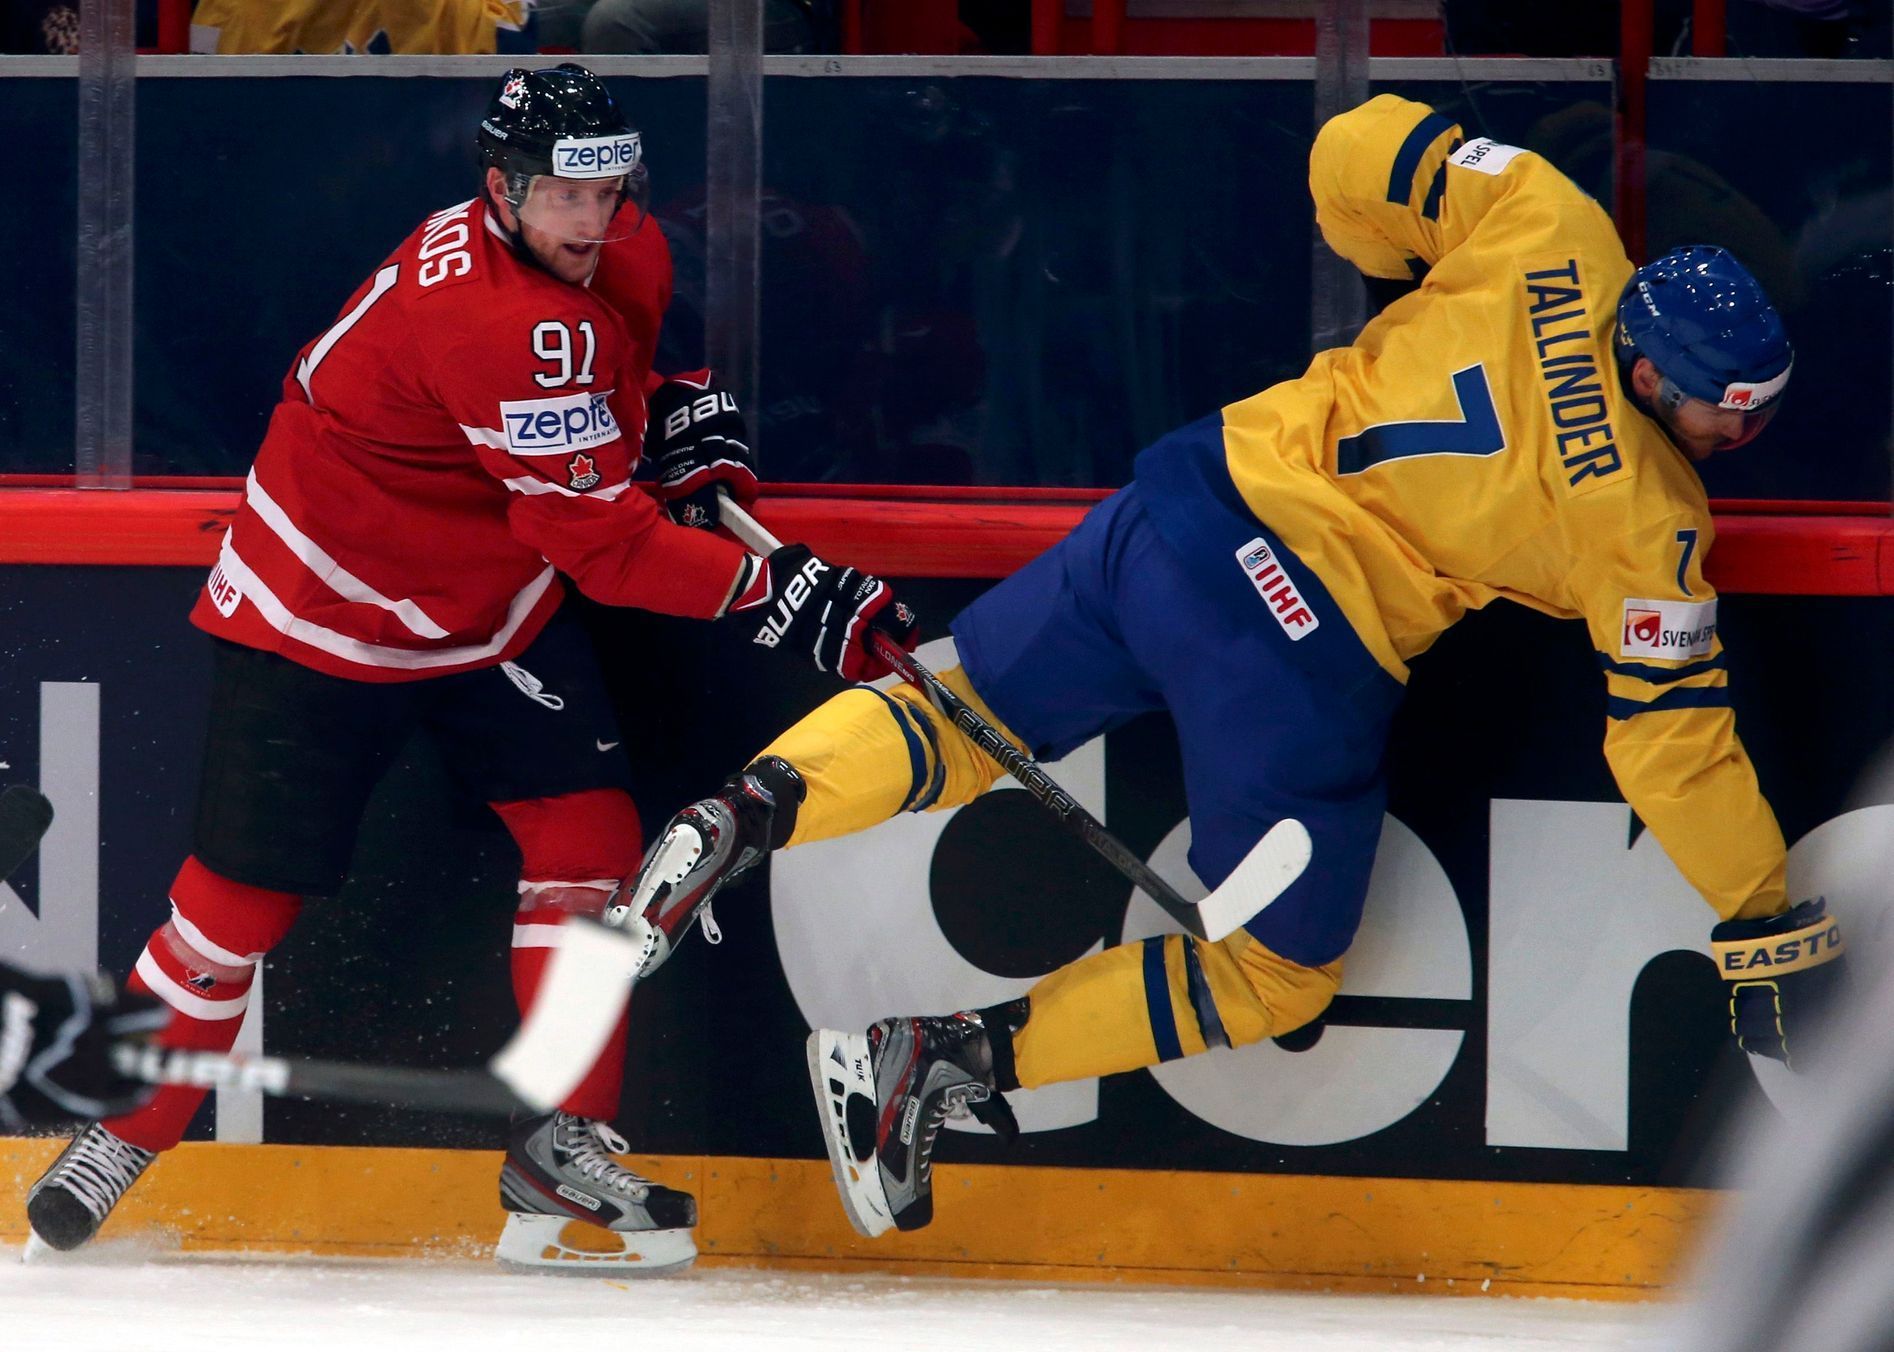 Hokej, MS 2013, Švédsko - Kanada: Henrik Tallinder - Steven Stamkos